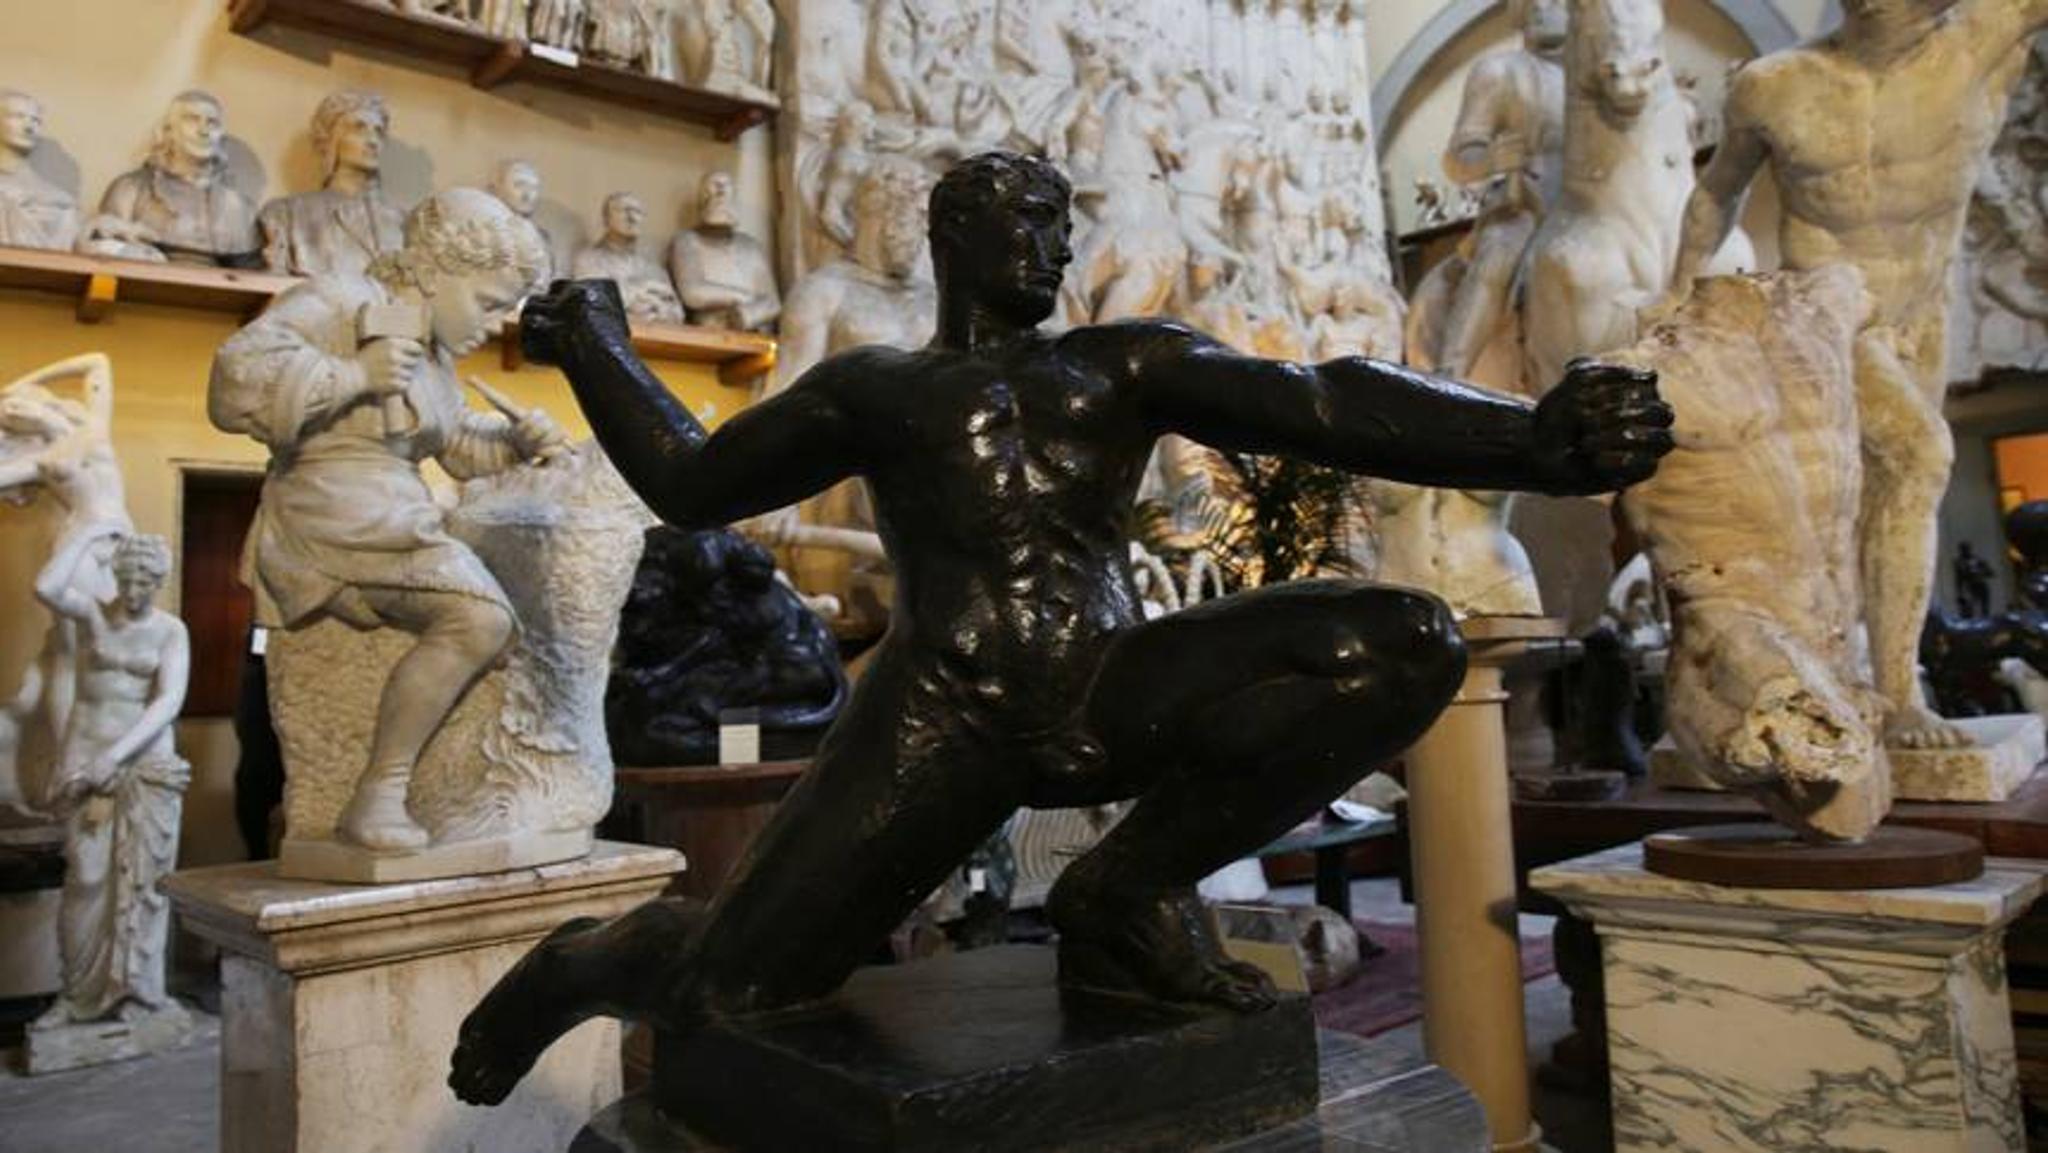 Historic statues in the bottega - Credits Gil Gilbert